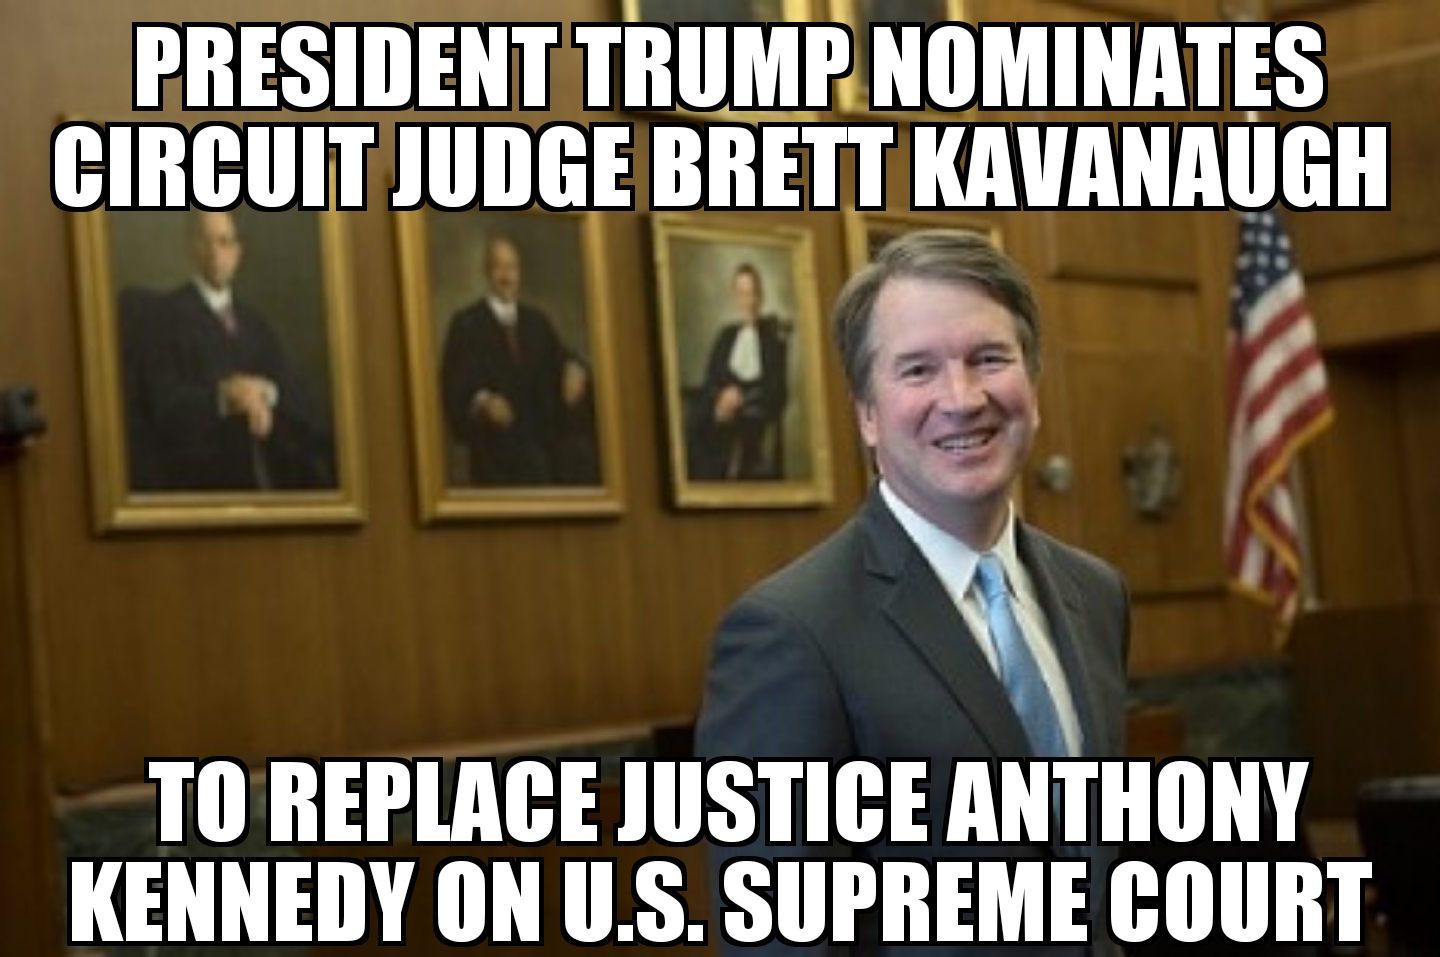 Trump nominates Brett Kavanaugh to U.S. Supreme Court